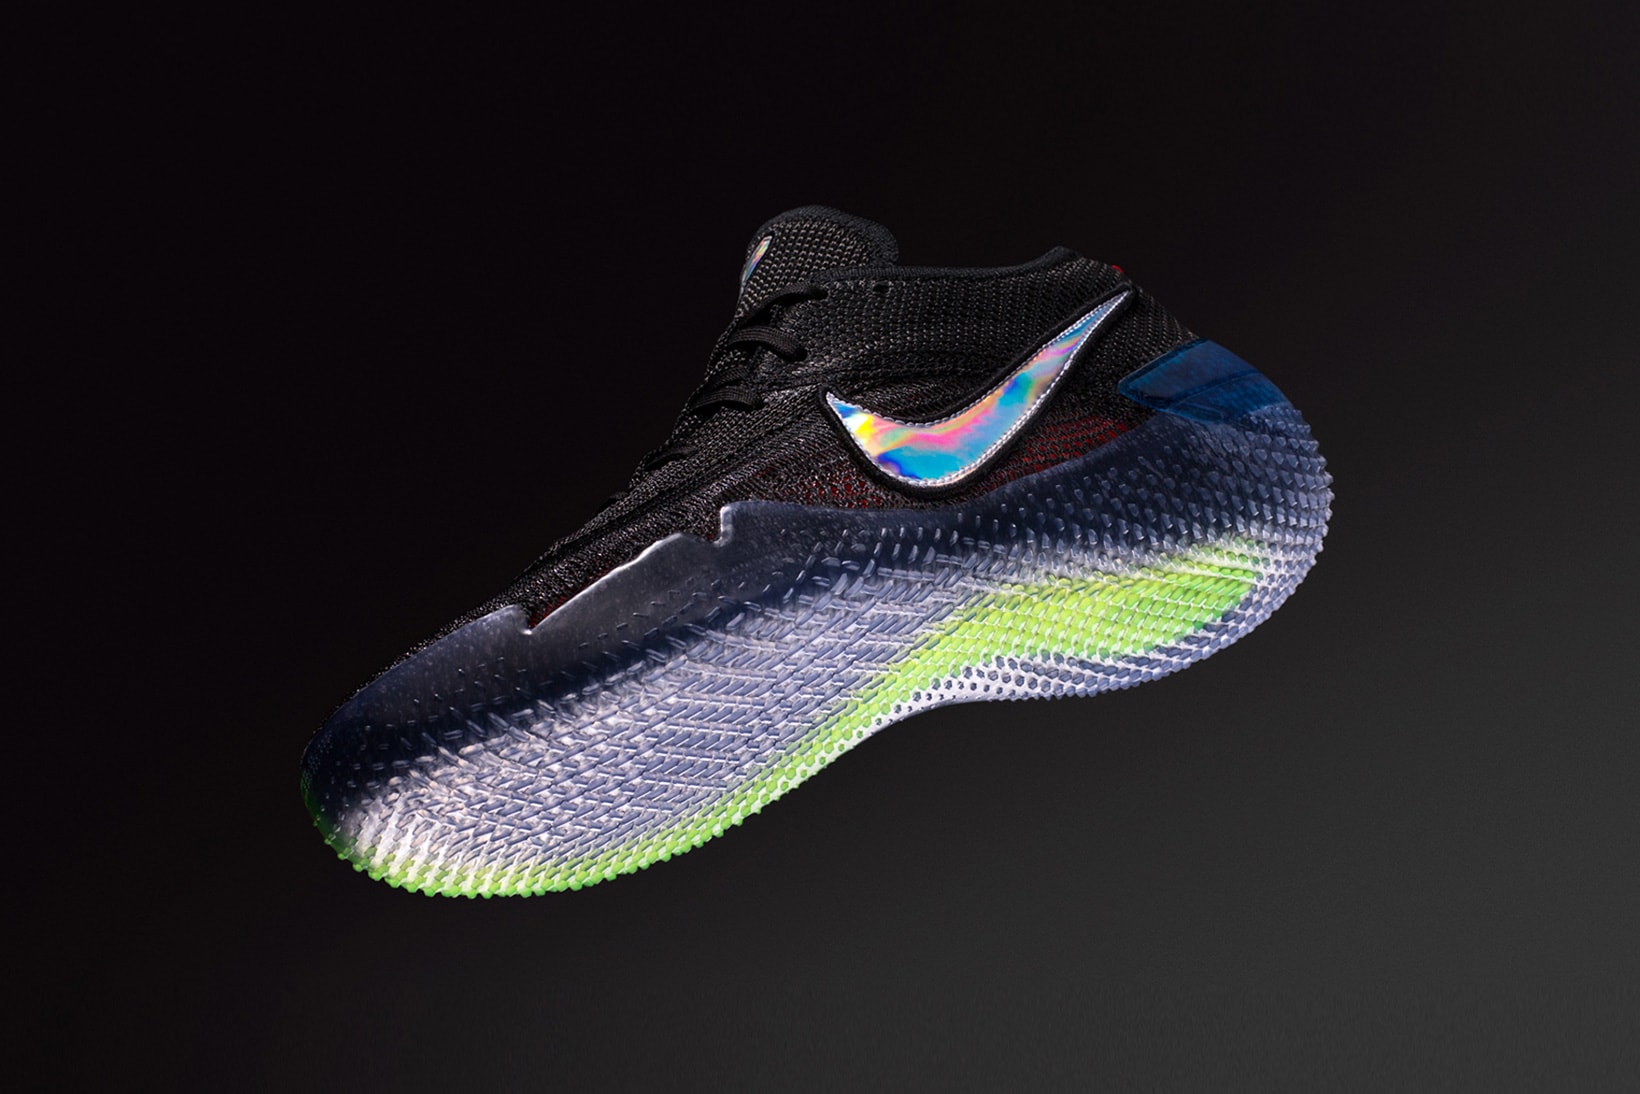 Nike Kobe NXT 360 Specs Kobe Bryant Nike Basketball footwear 2018 april release dates